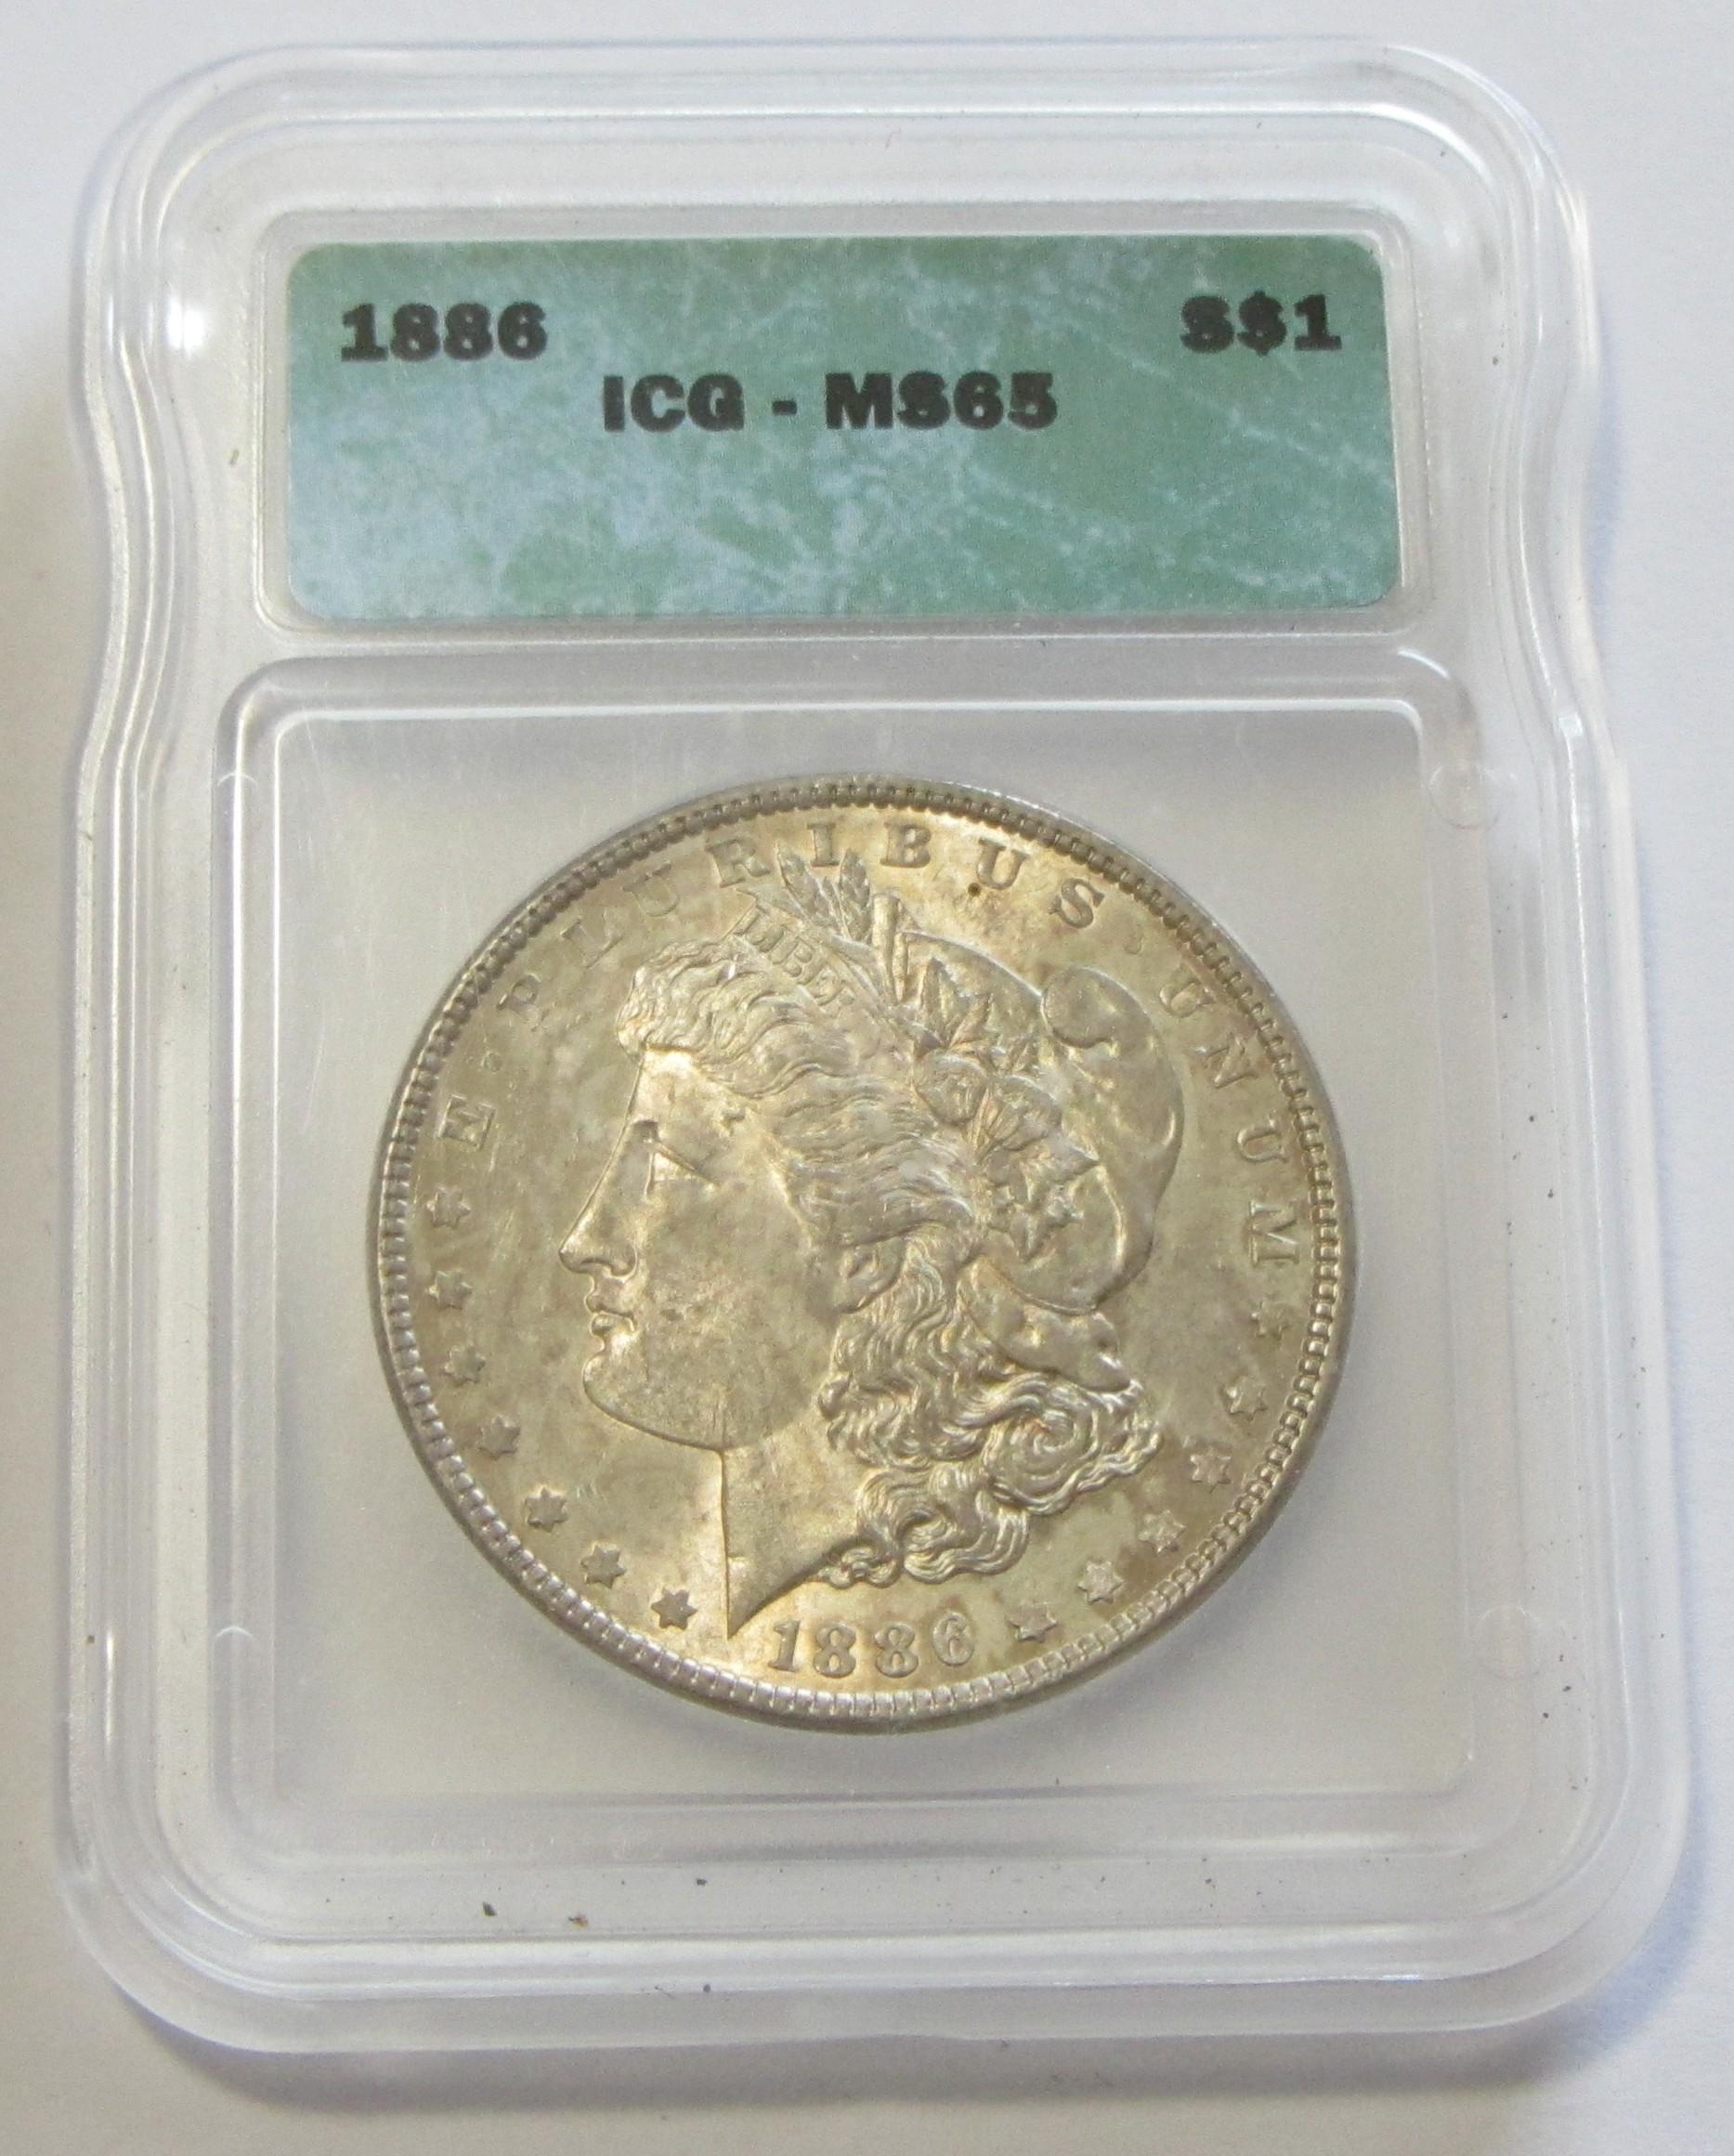 $1 1886 MORGAN GEM ICG 65